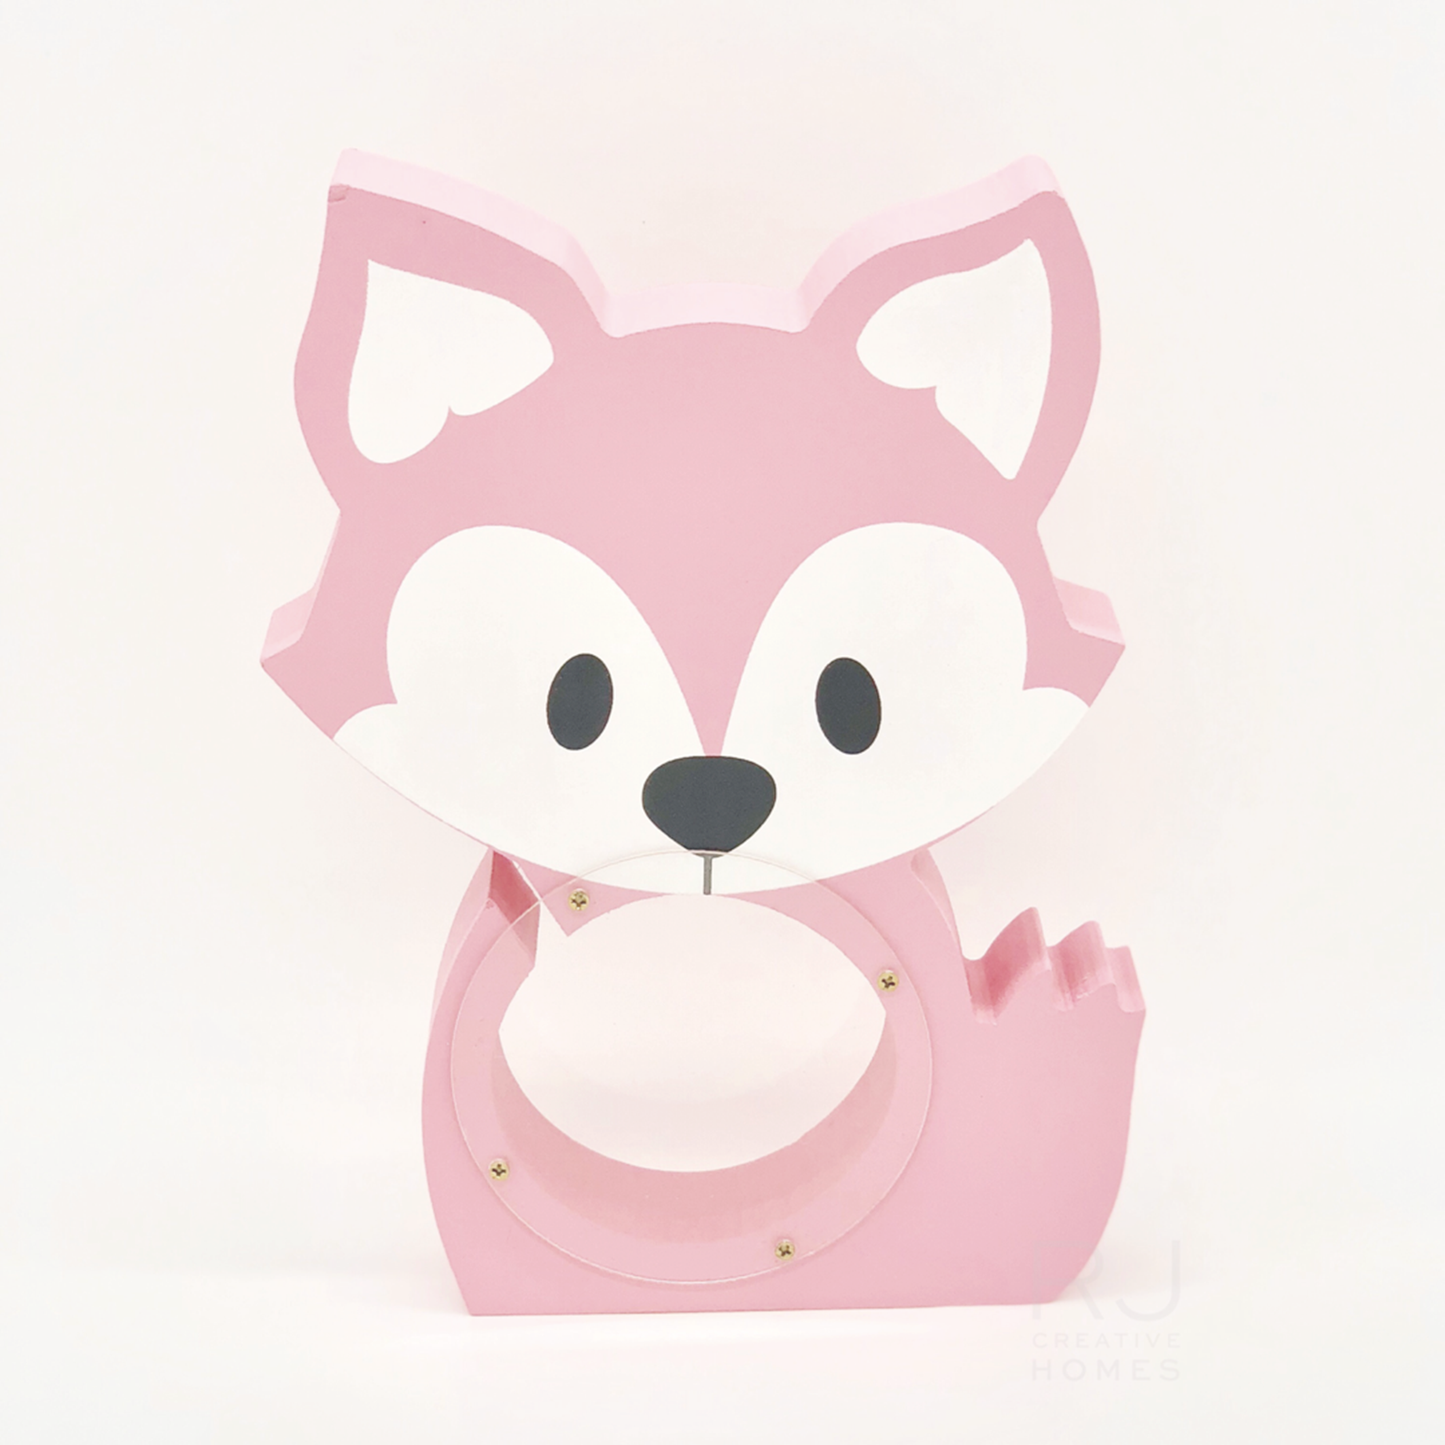 Pink fox wooden coin bank 𝟒𝟎% 𝐎𝐅𝐅